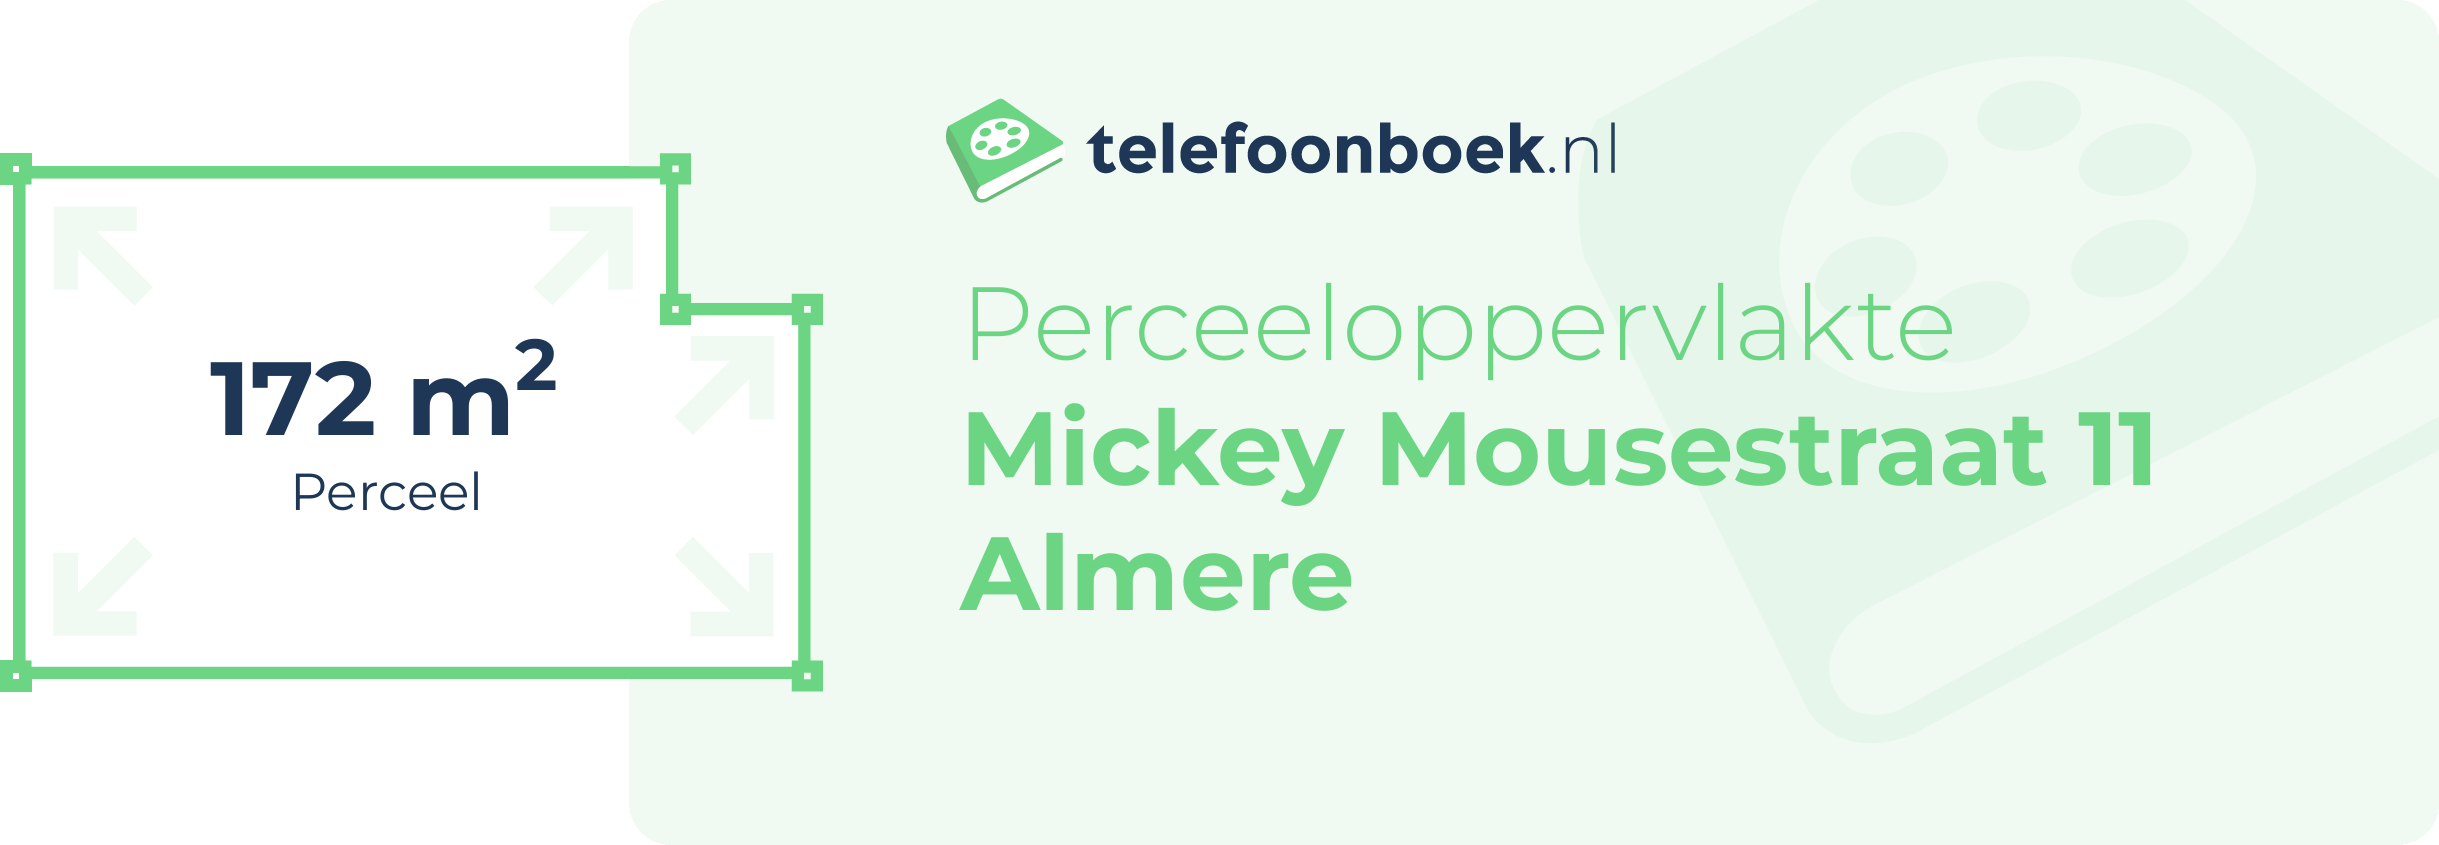 Perceeloppervlakte Mickey Mousestraat 11 Almere